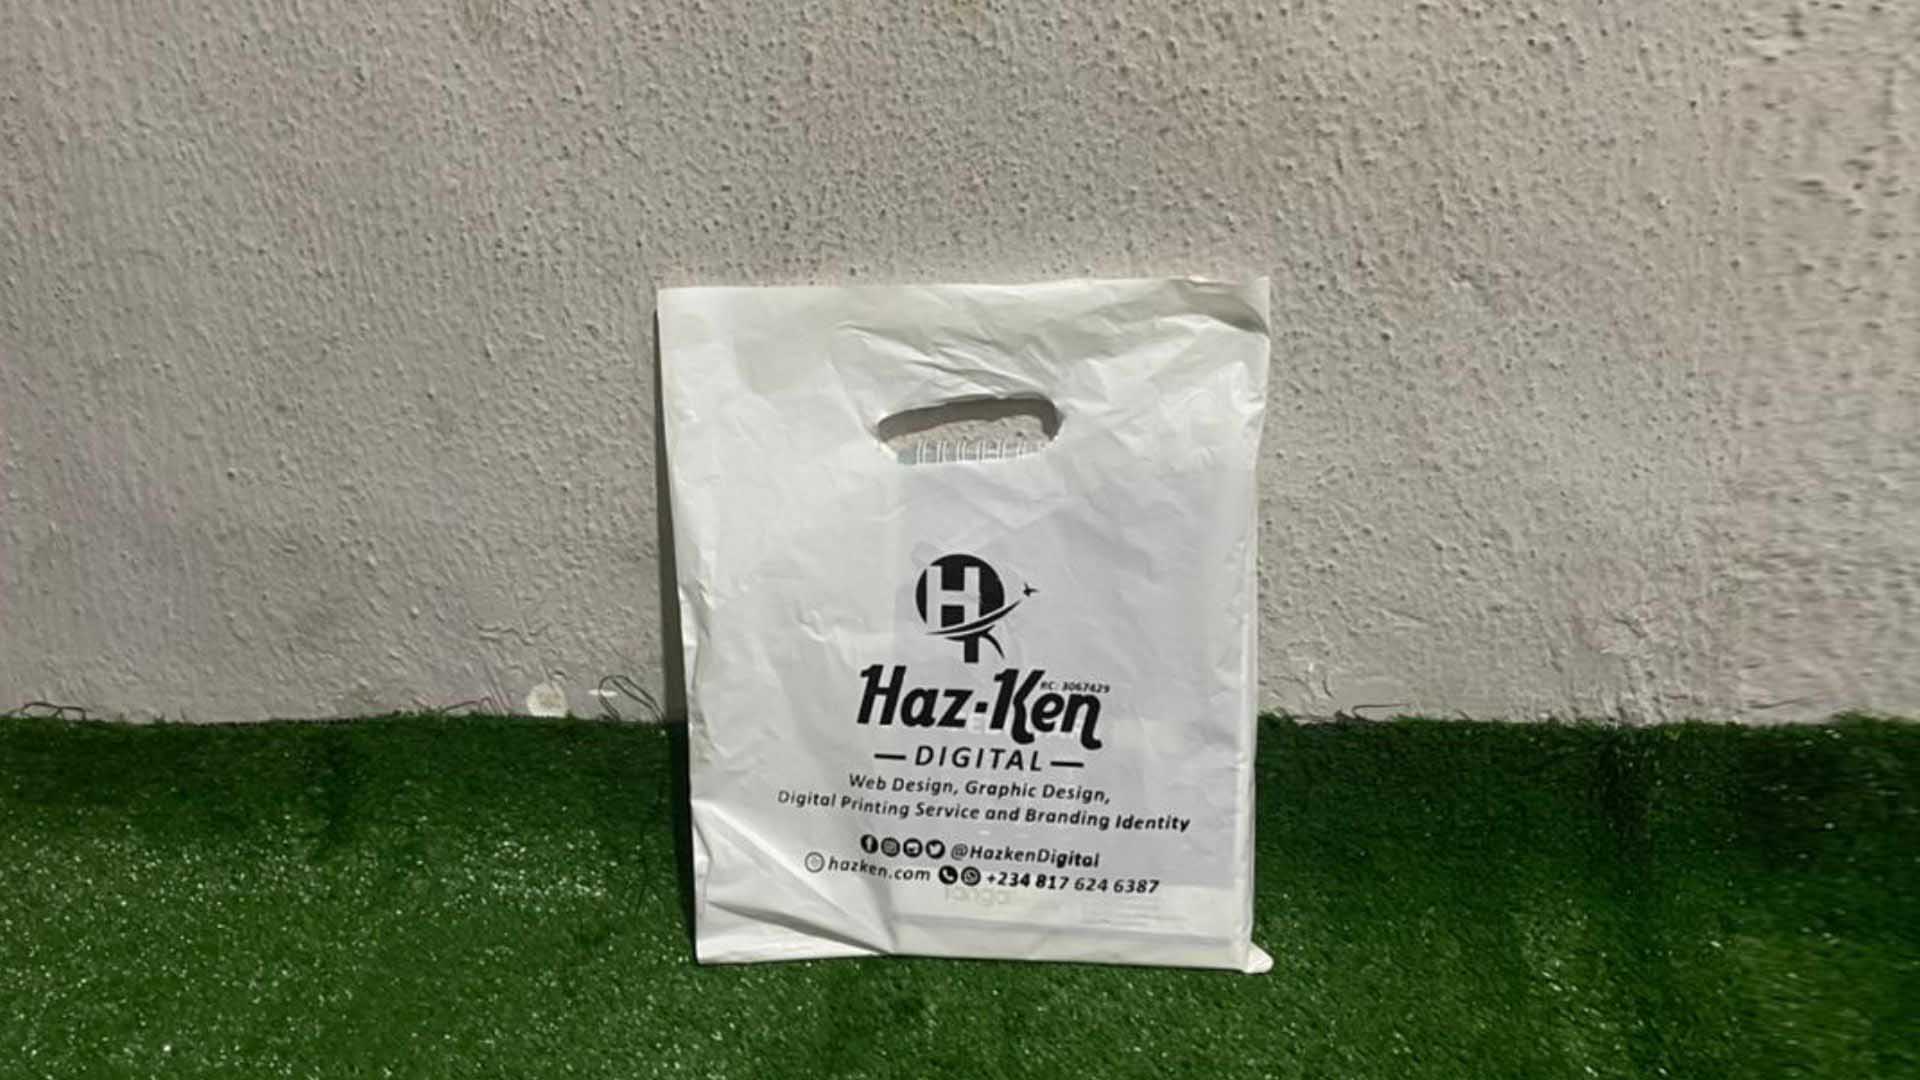 Nylon bags Design and Printing in Lagos Nigeria